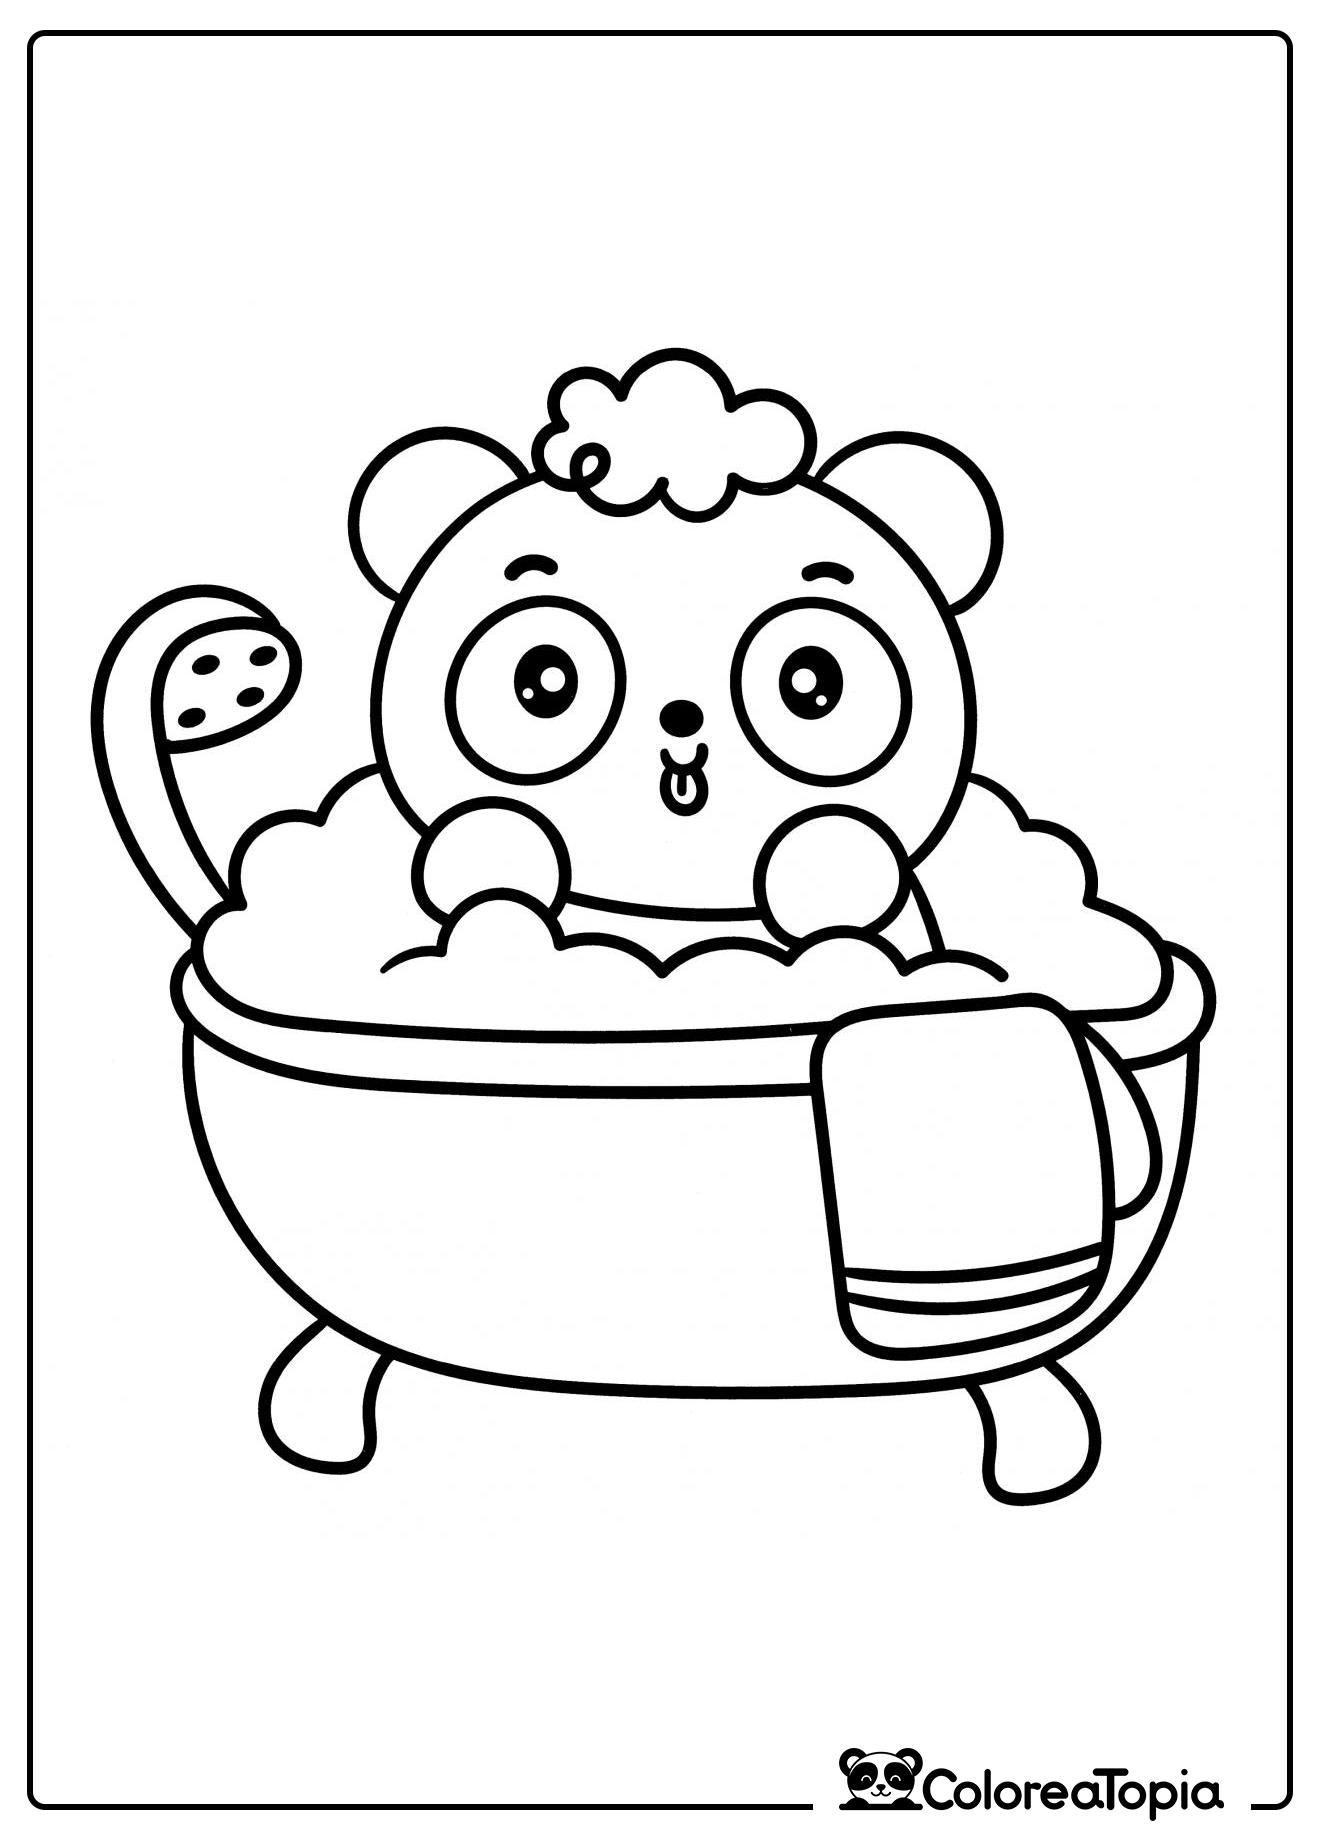 Pandita se está bañando - dibujo para colorear